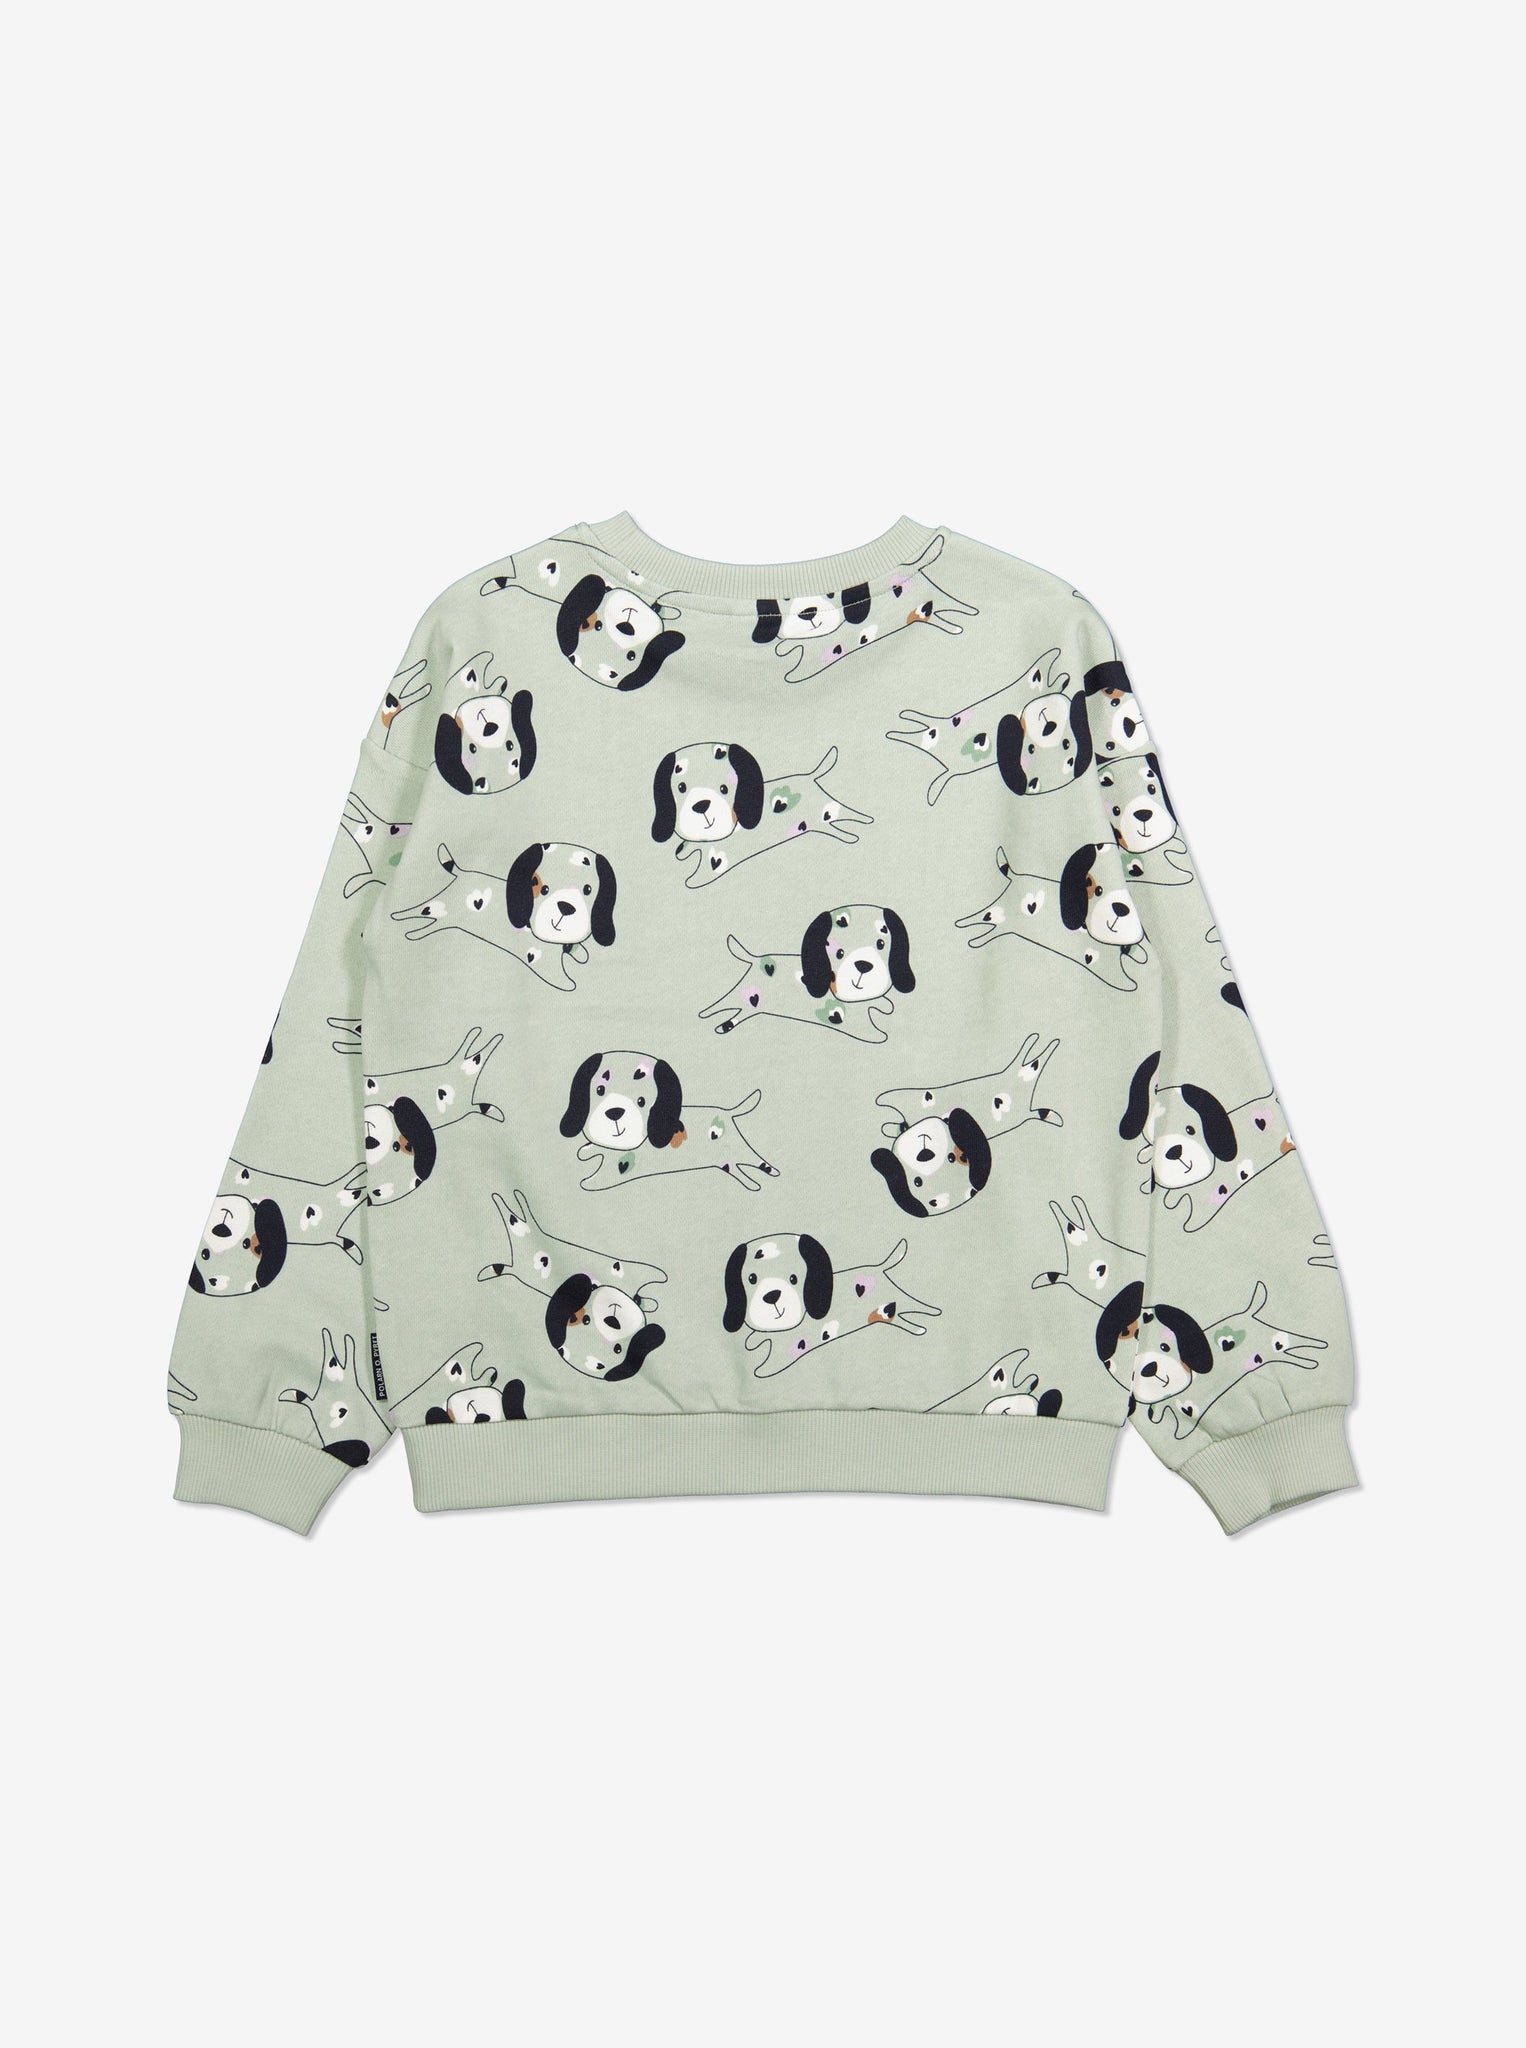  Organic Grey Puppy Print Kids Sweatshirt from Polarn O. Pyret Kidswear. Made with soft 100% organic cotton.